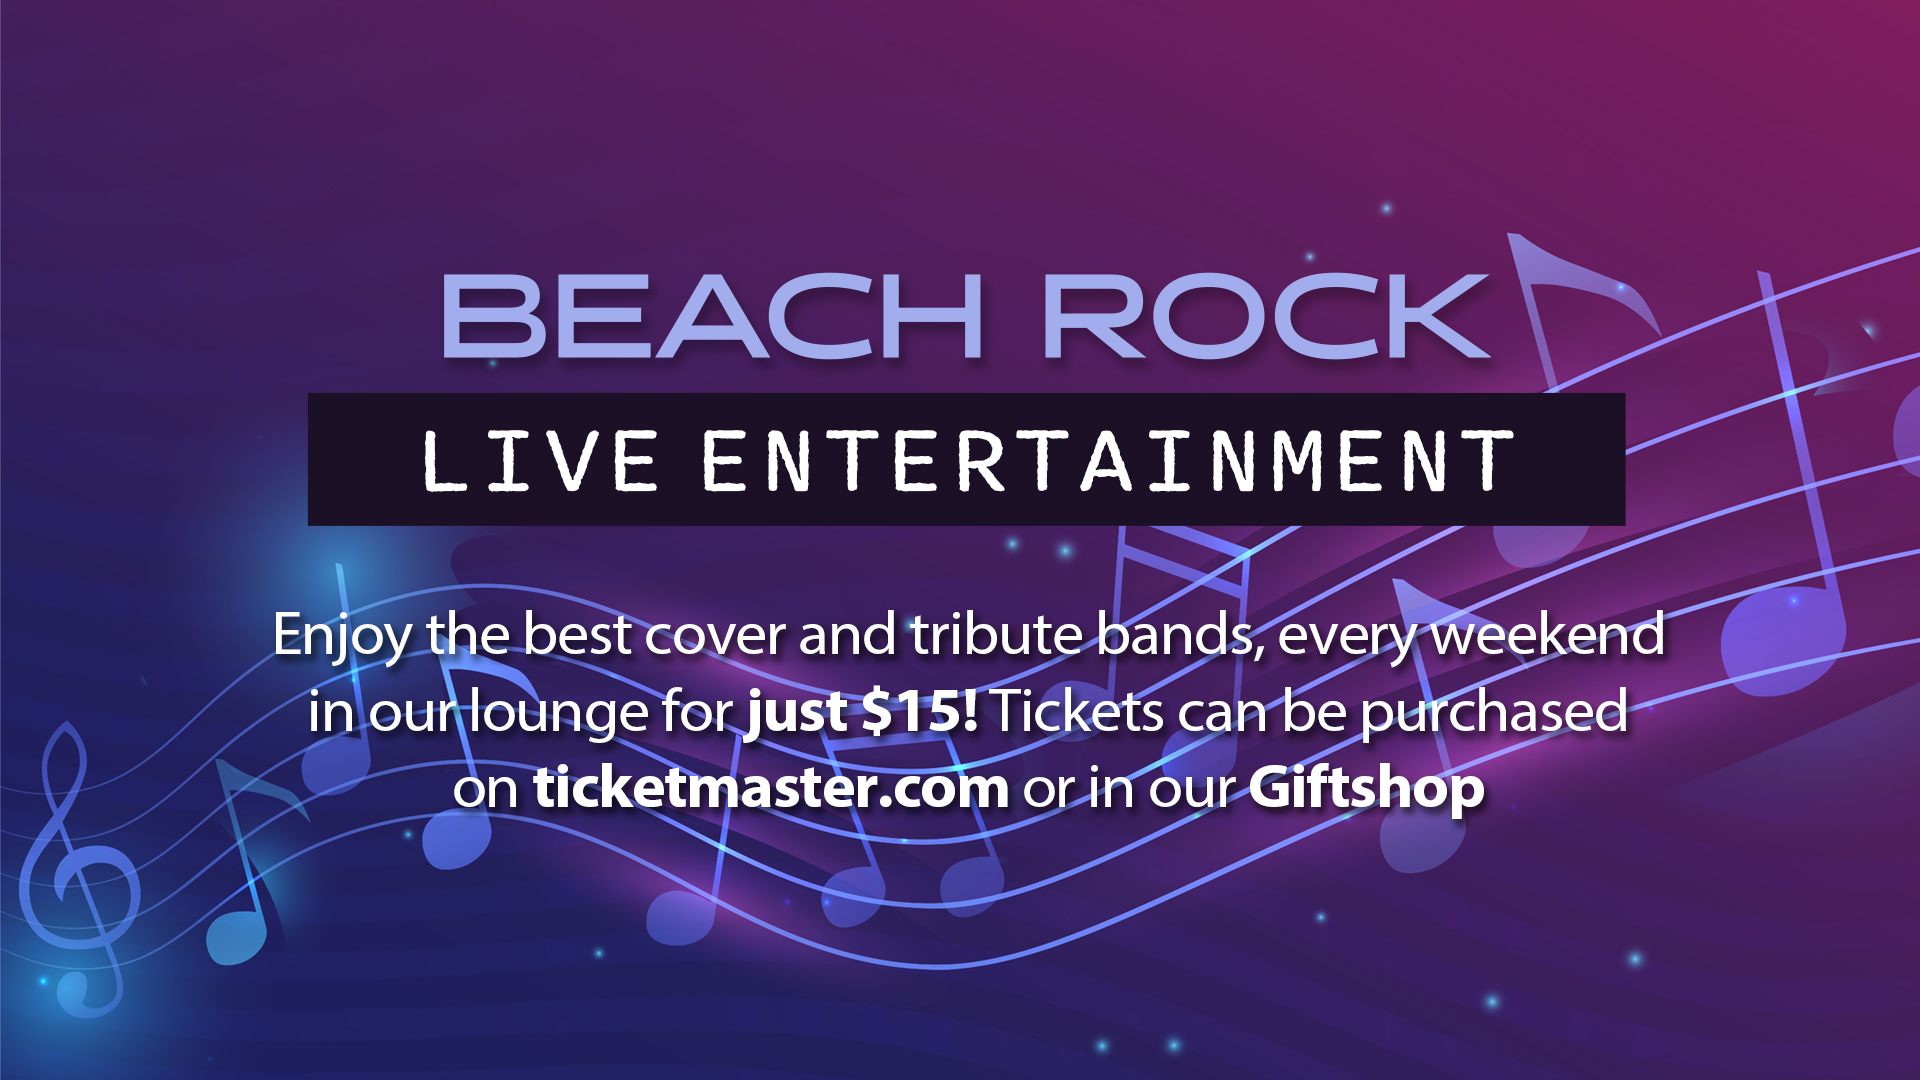 BEACH ROCK LIVE ENTERTAINMENT